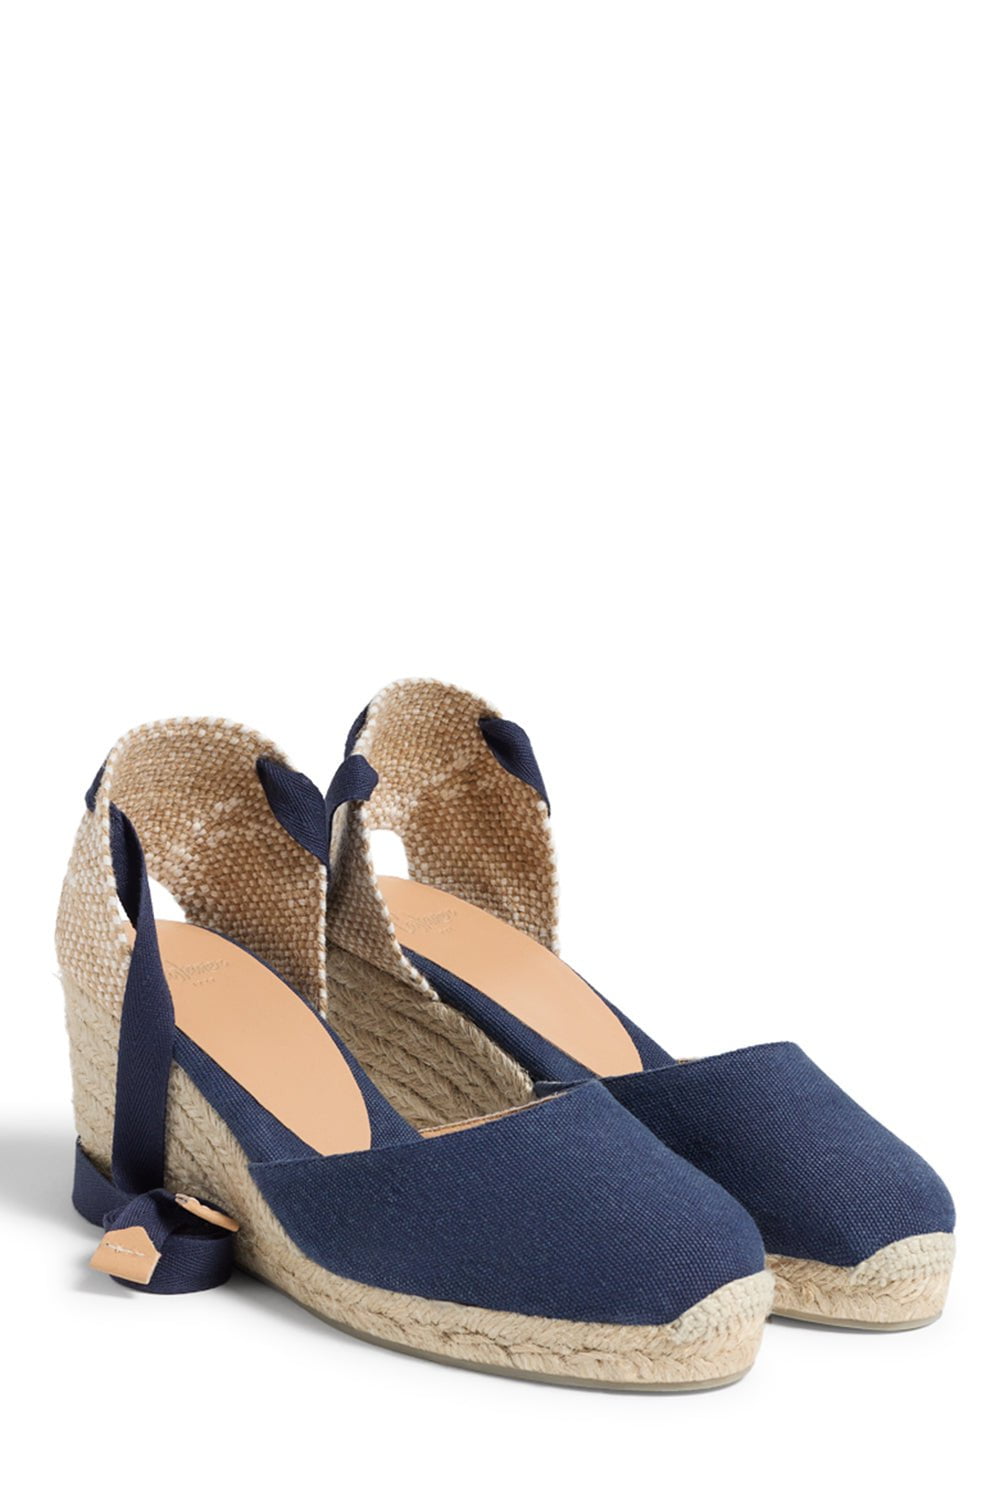 CASTANER-Carina Wedge Sandal - Azul Oxford-